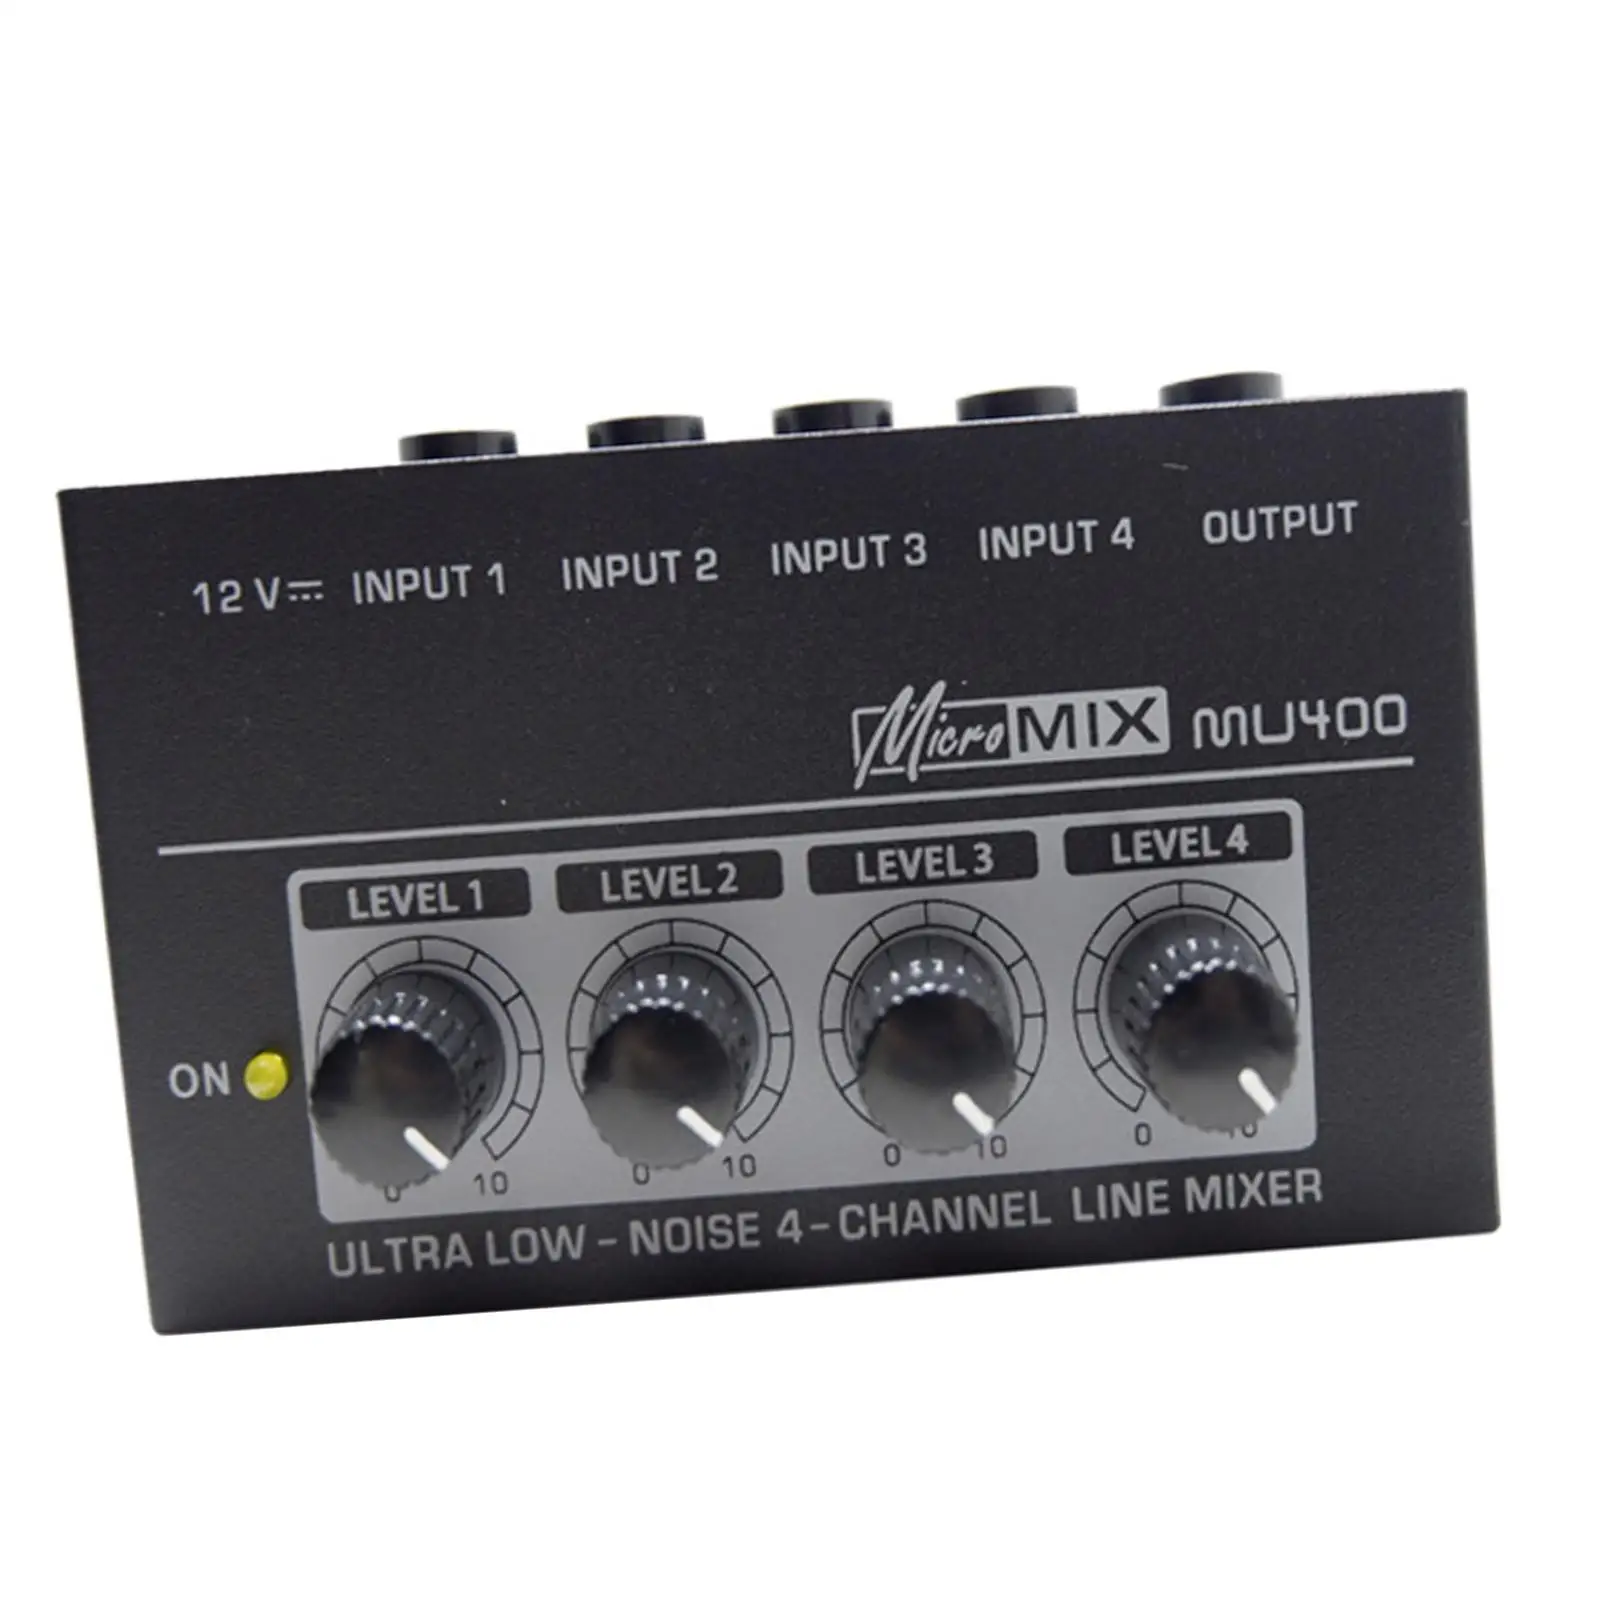 Audio Mixer Compact Stereo Mixer 12V Portable Mixer Line Mixer for Club Mixing Instrument Mobile Phone Live and Studio Recording